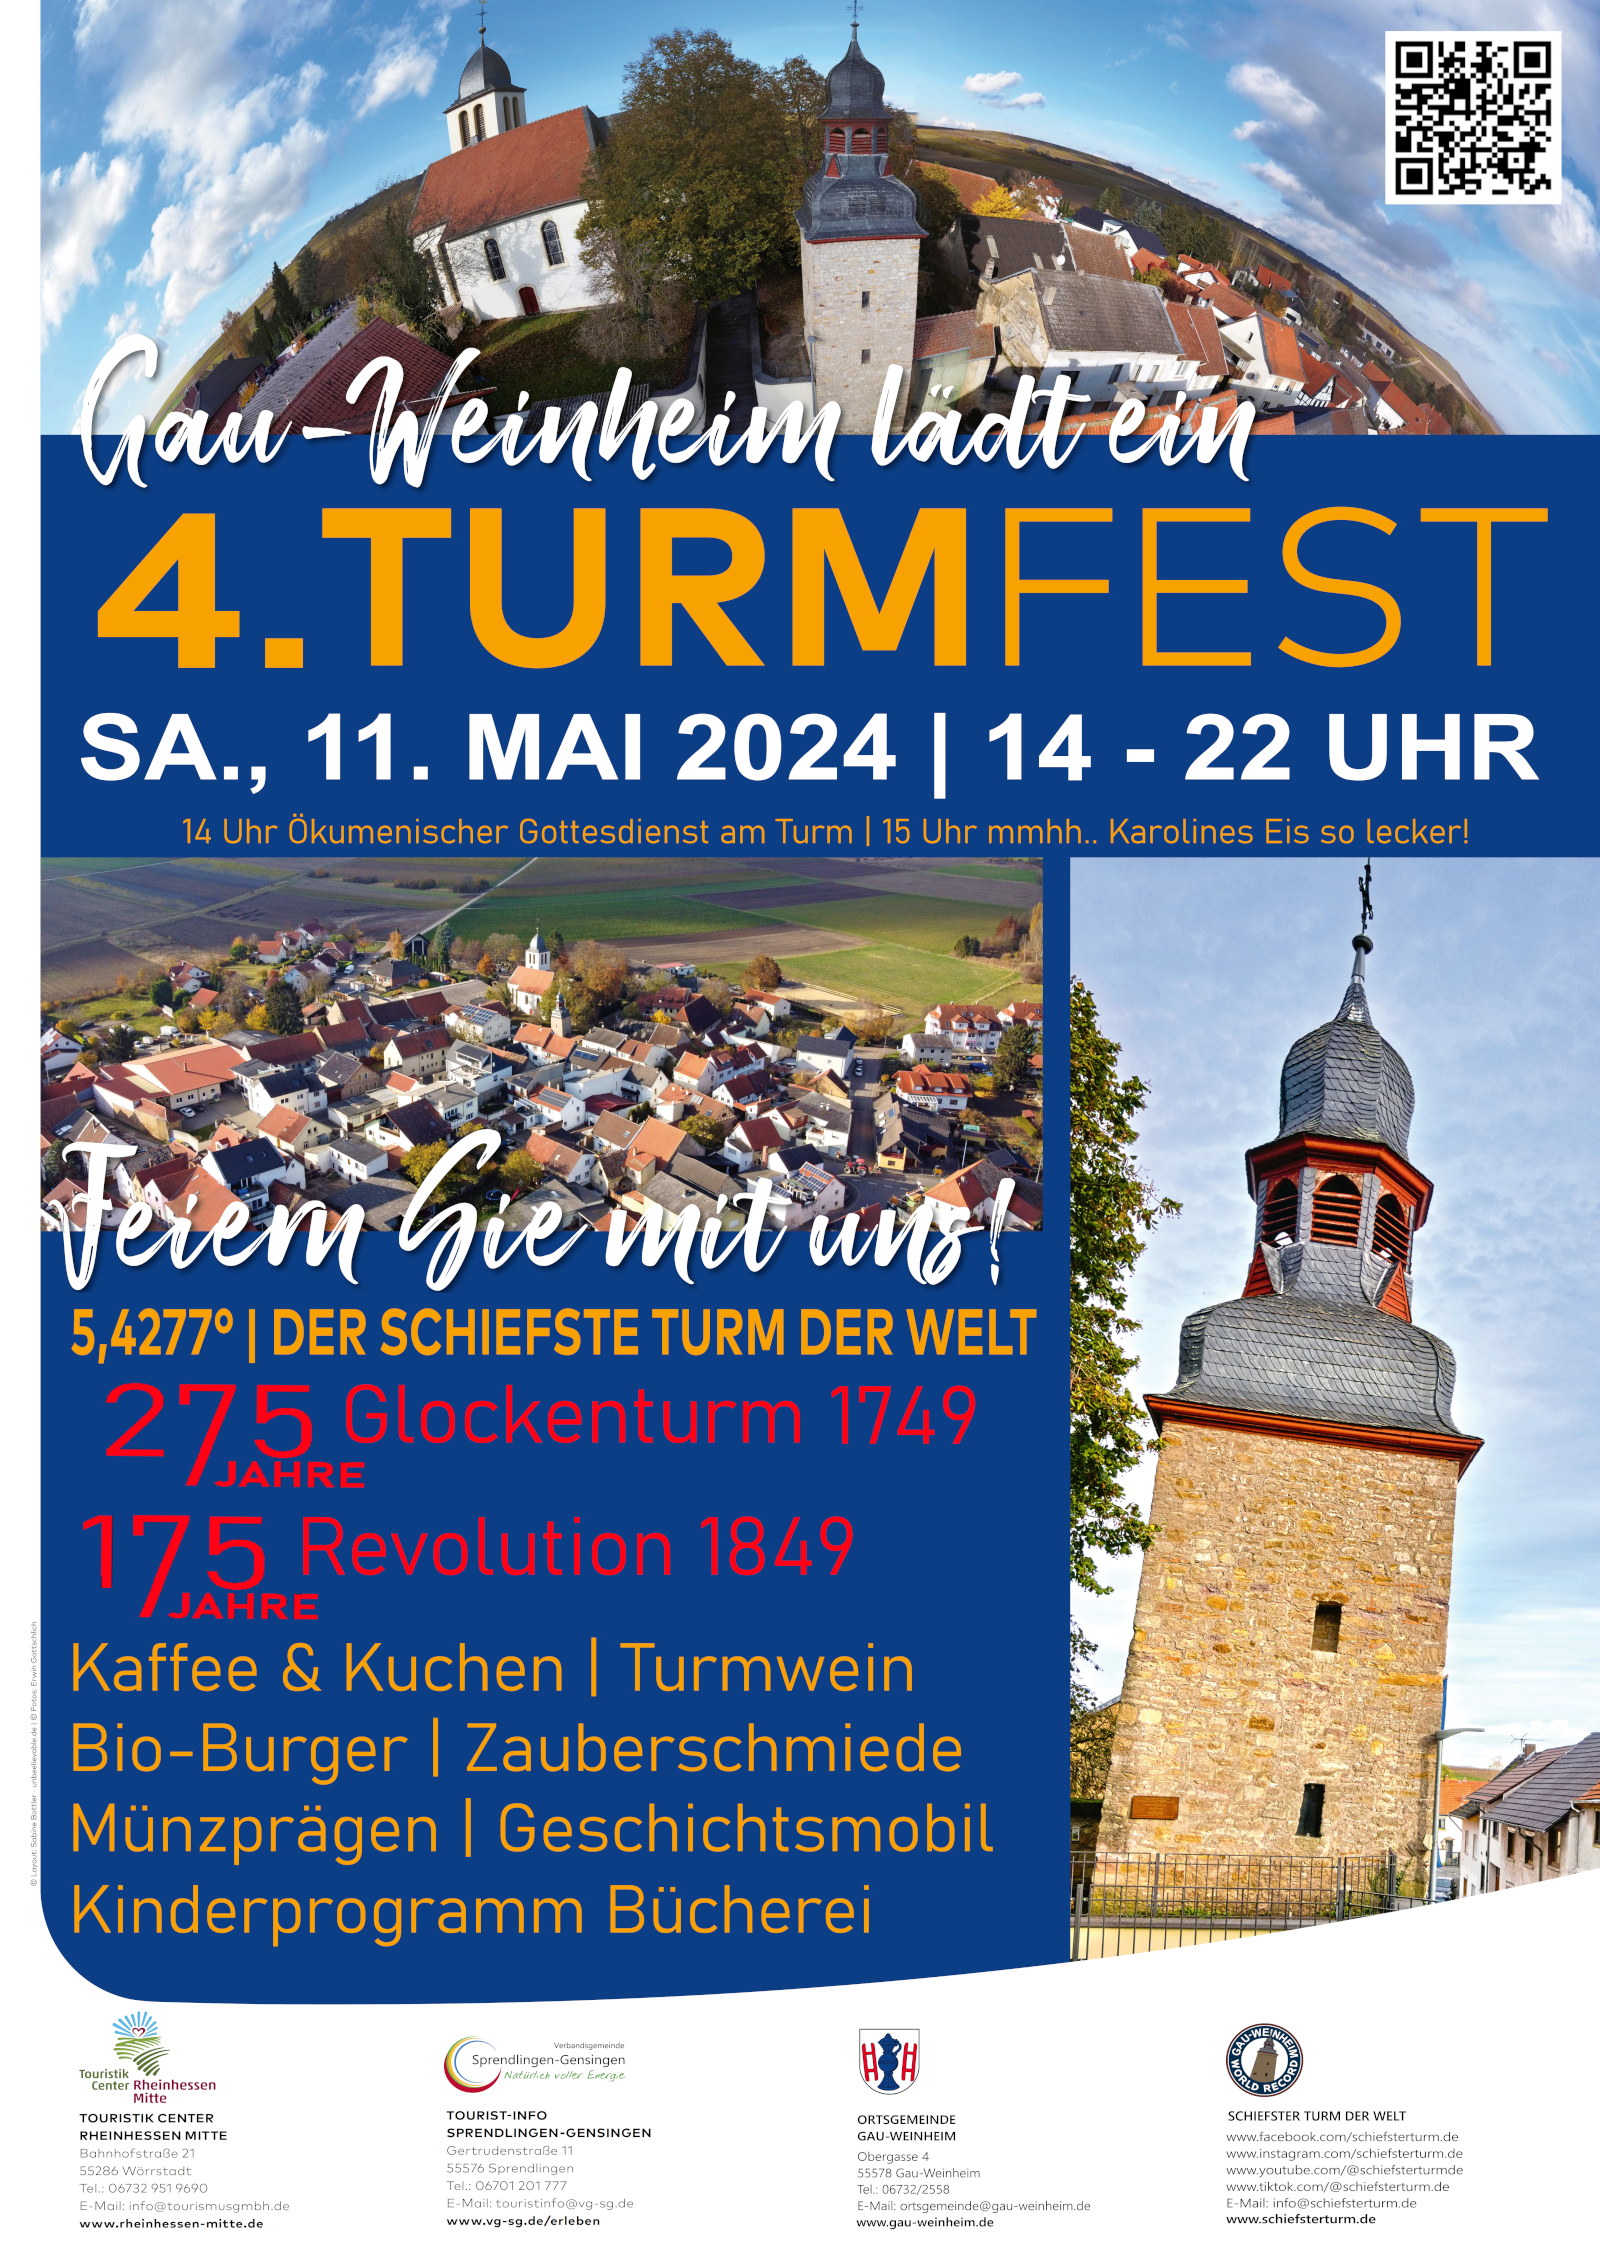 4. Turmfest SA., 11.MAI 2024 | AB 14 UHR